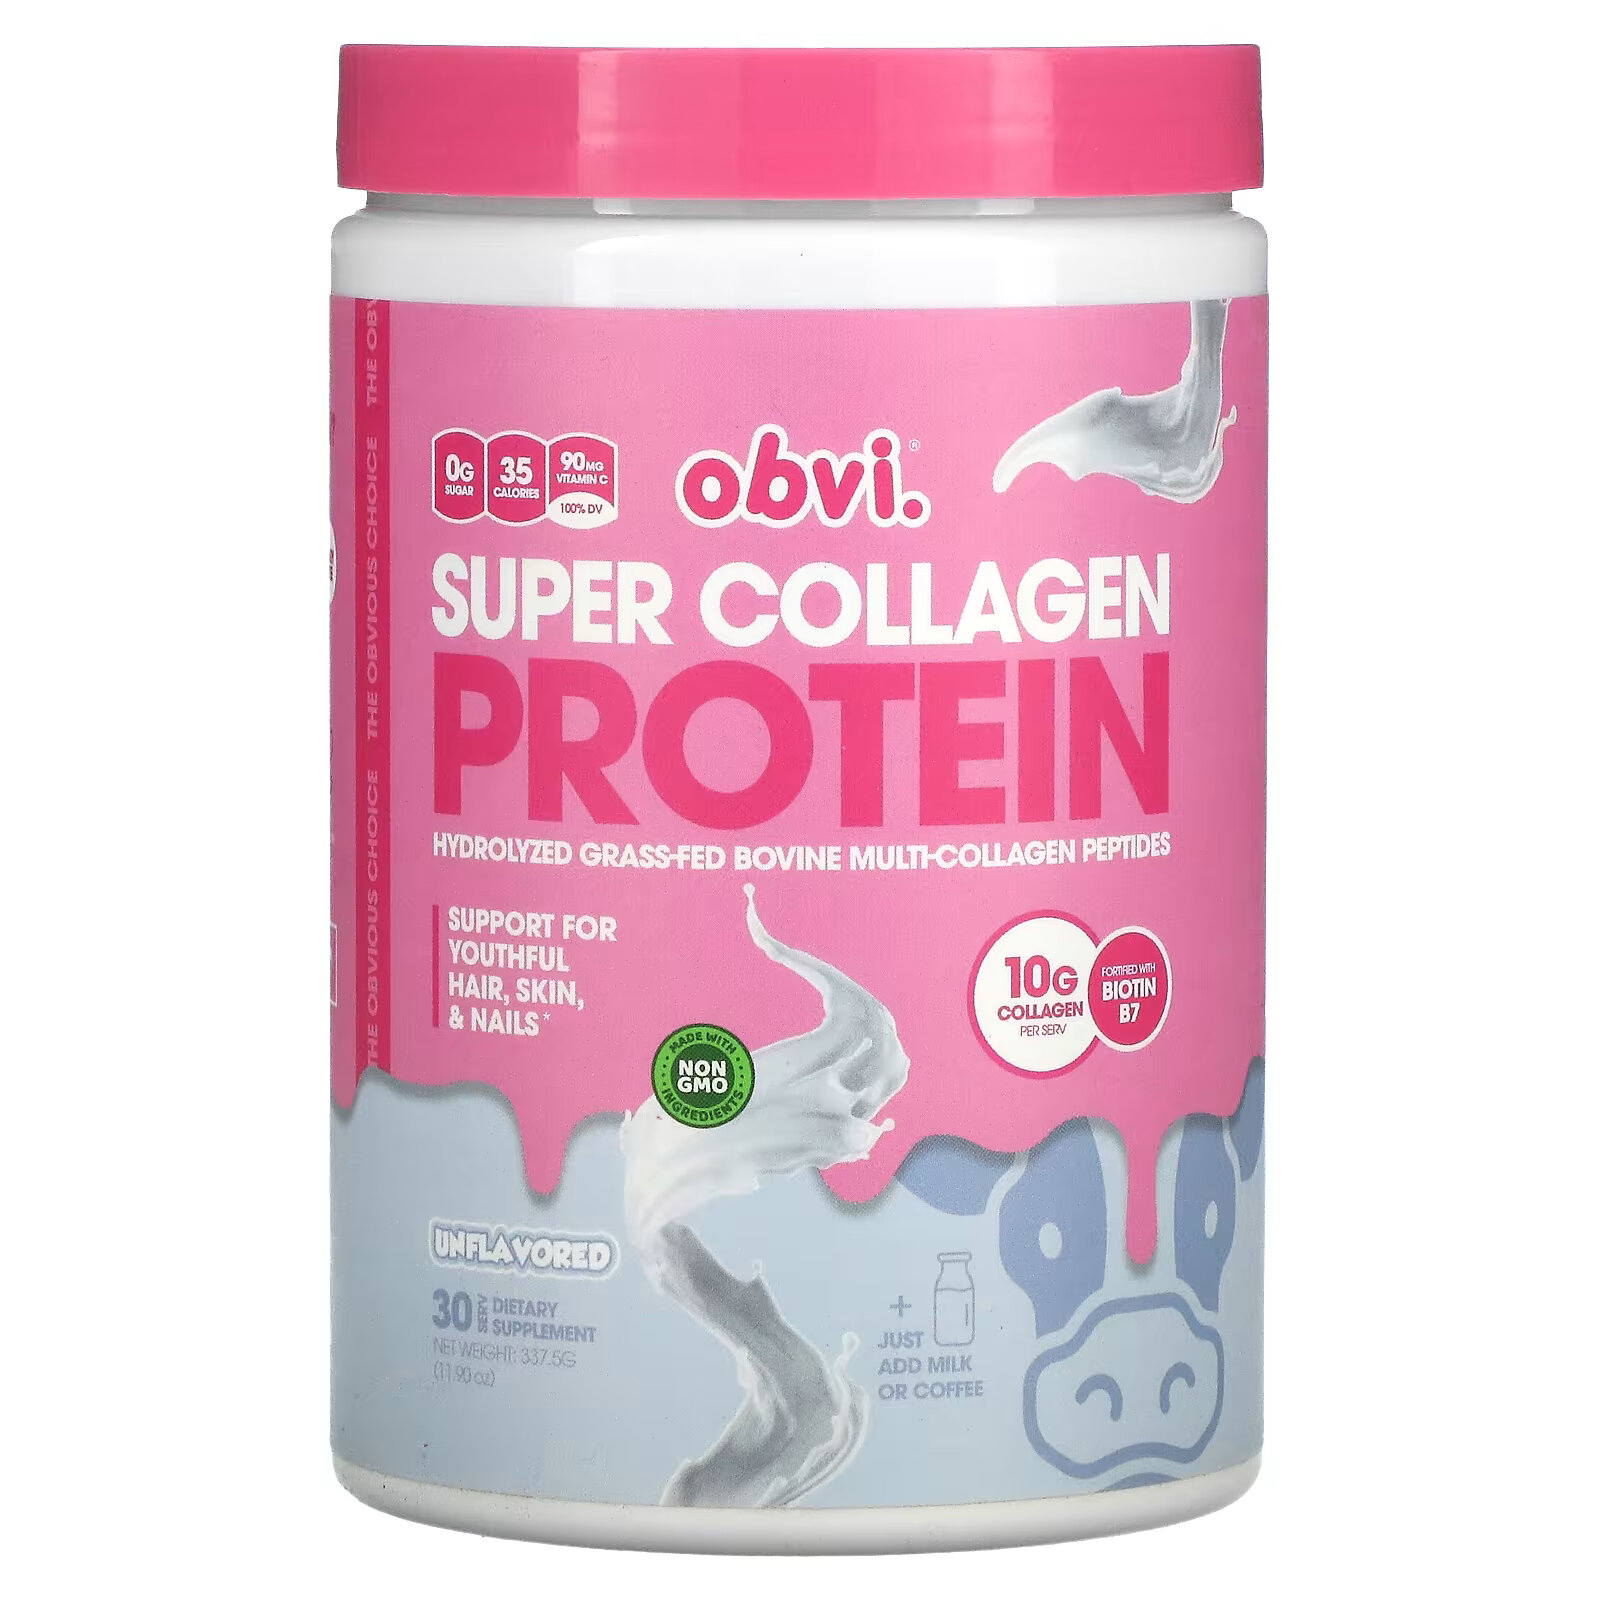 Obvi, Super Collagen Protein, без добавок, 337,5 г (11,90 унции) obvi super collagen protein без добавок 337 5 г 11 90 унции